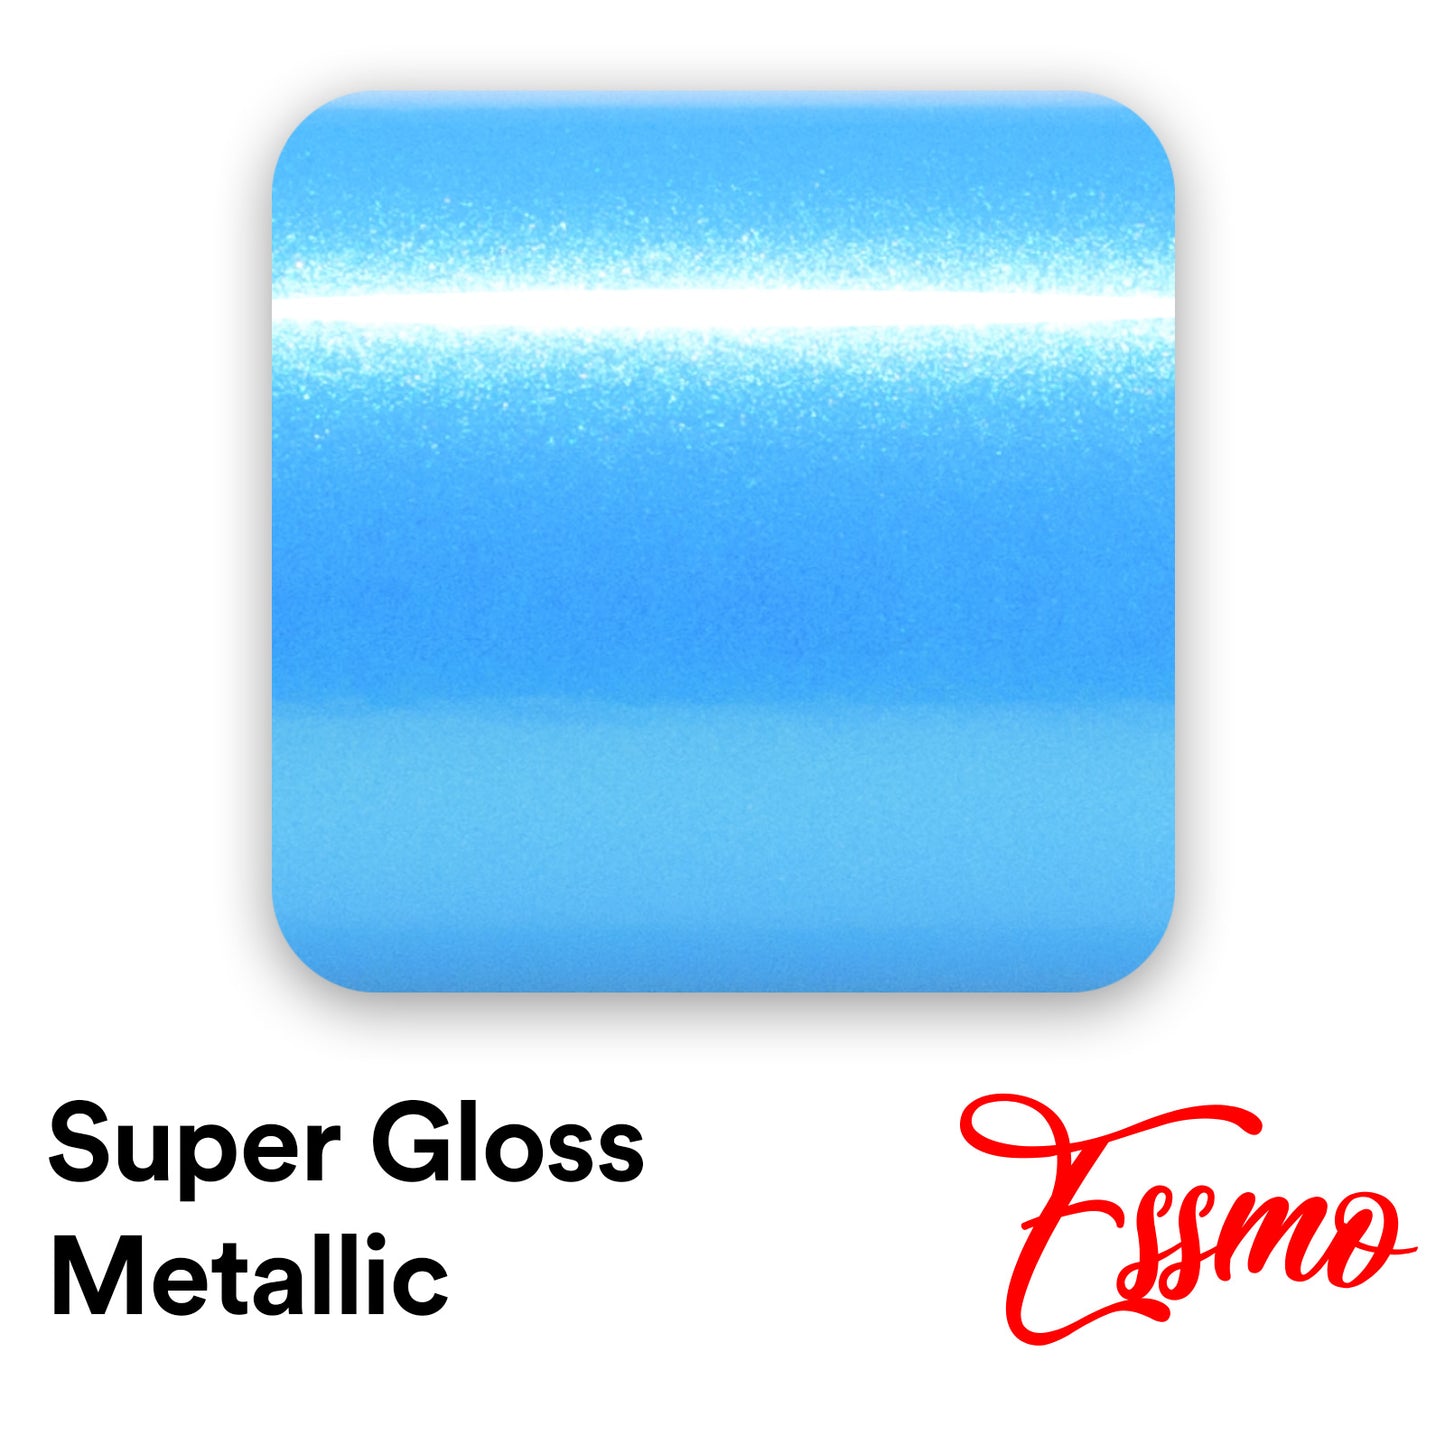 Super Gloss Metallic Ocean Blue Vinyl Wrap